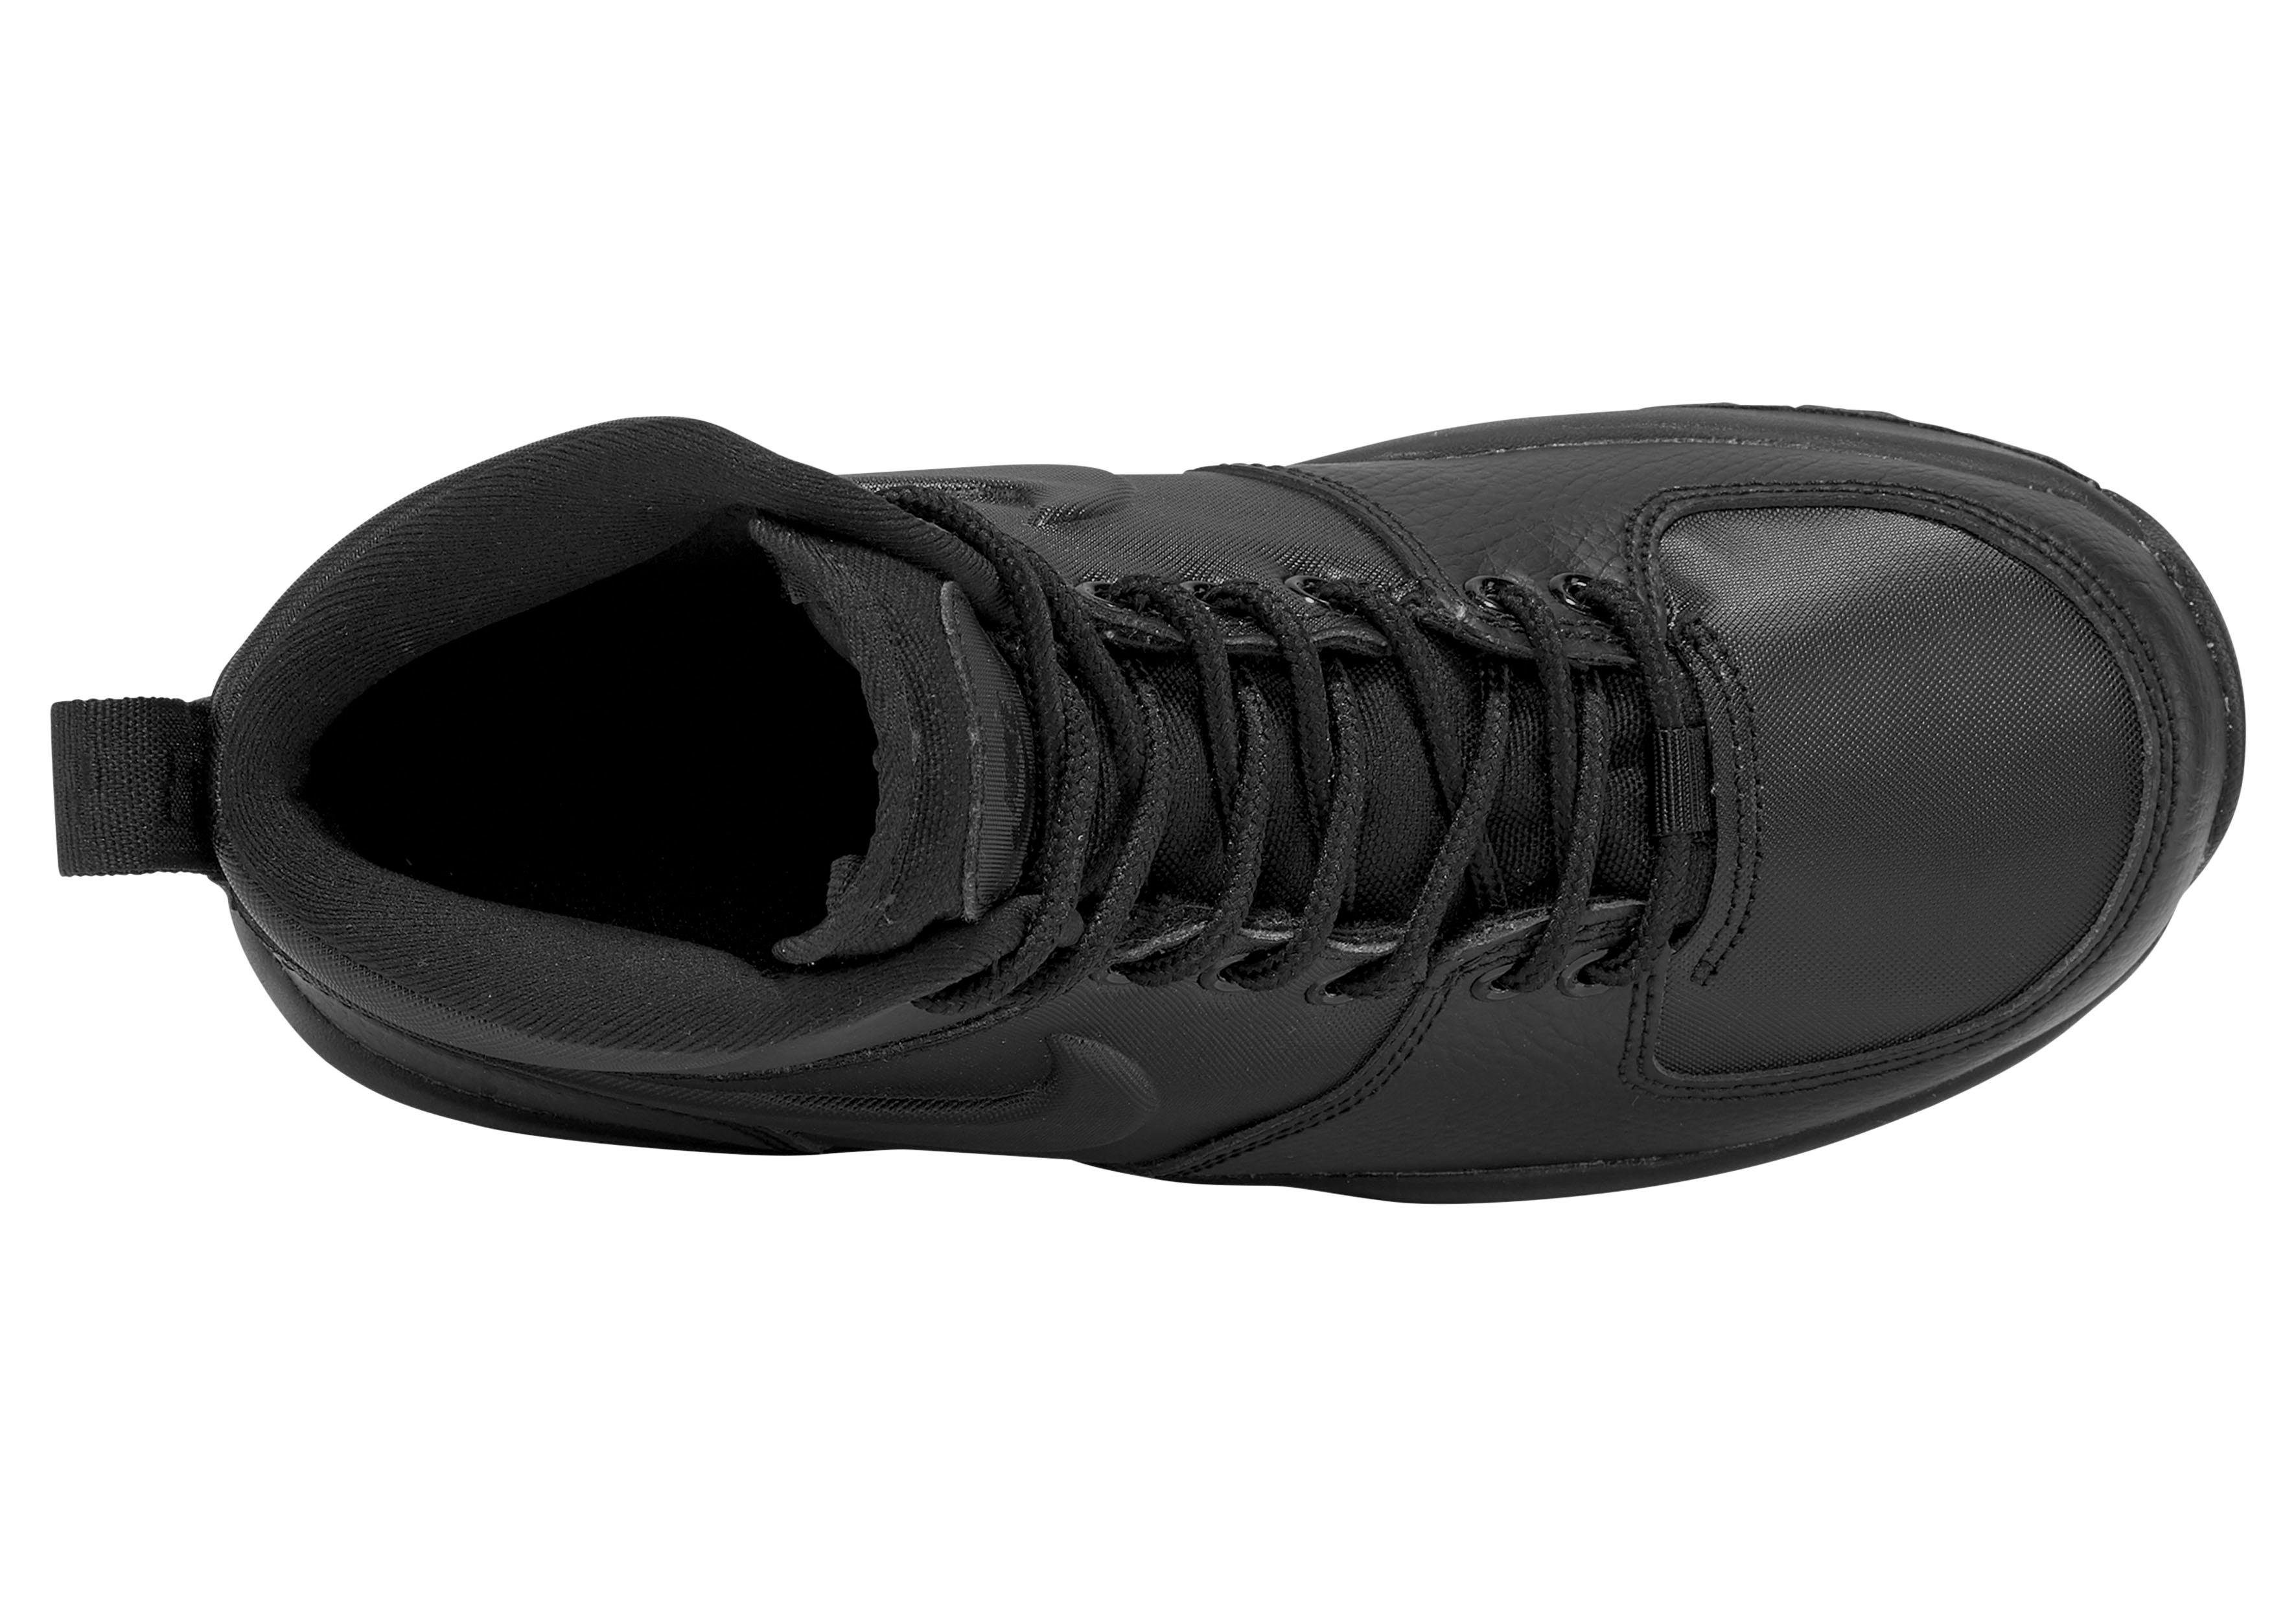 Nike Sportswear Manoa schwarz Leather Schnürboots